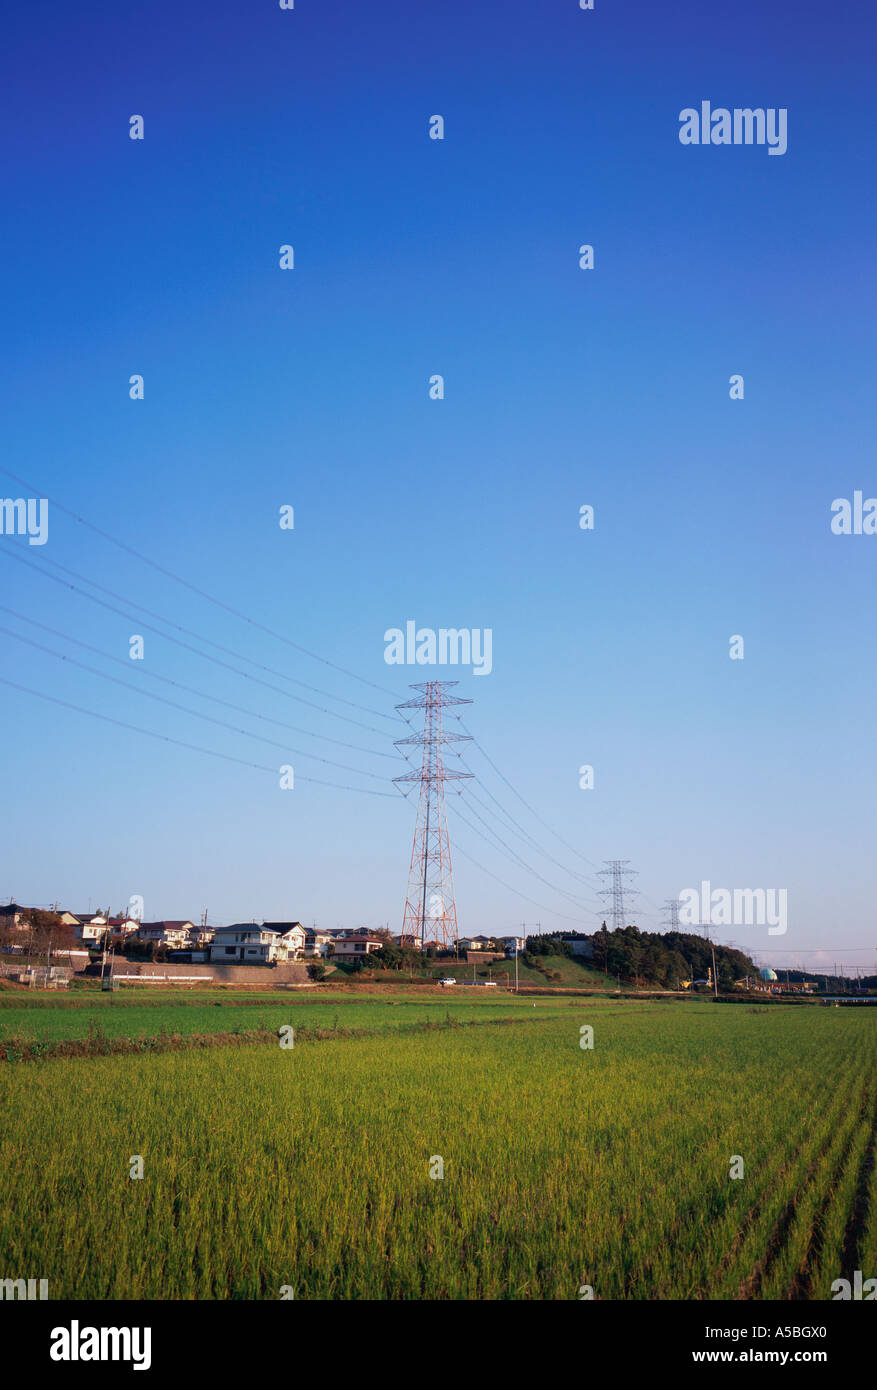 Electricity pylon in field Stock Photo